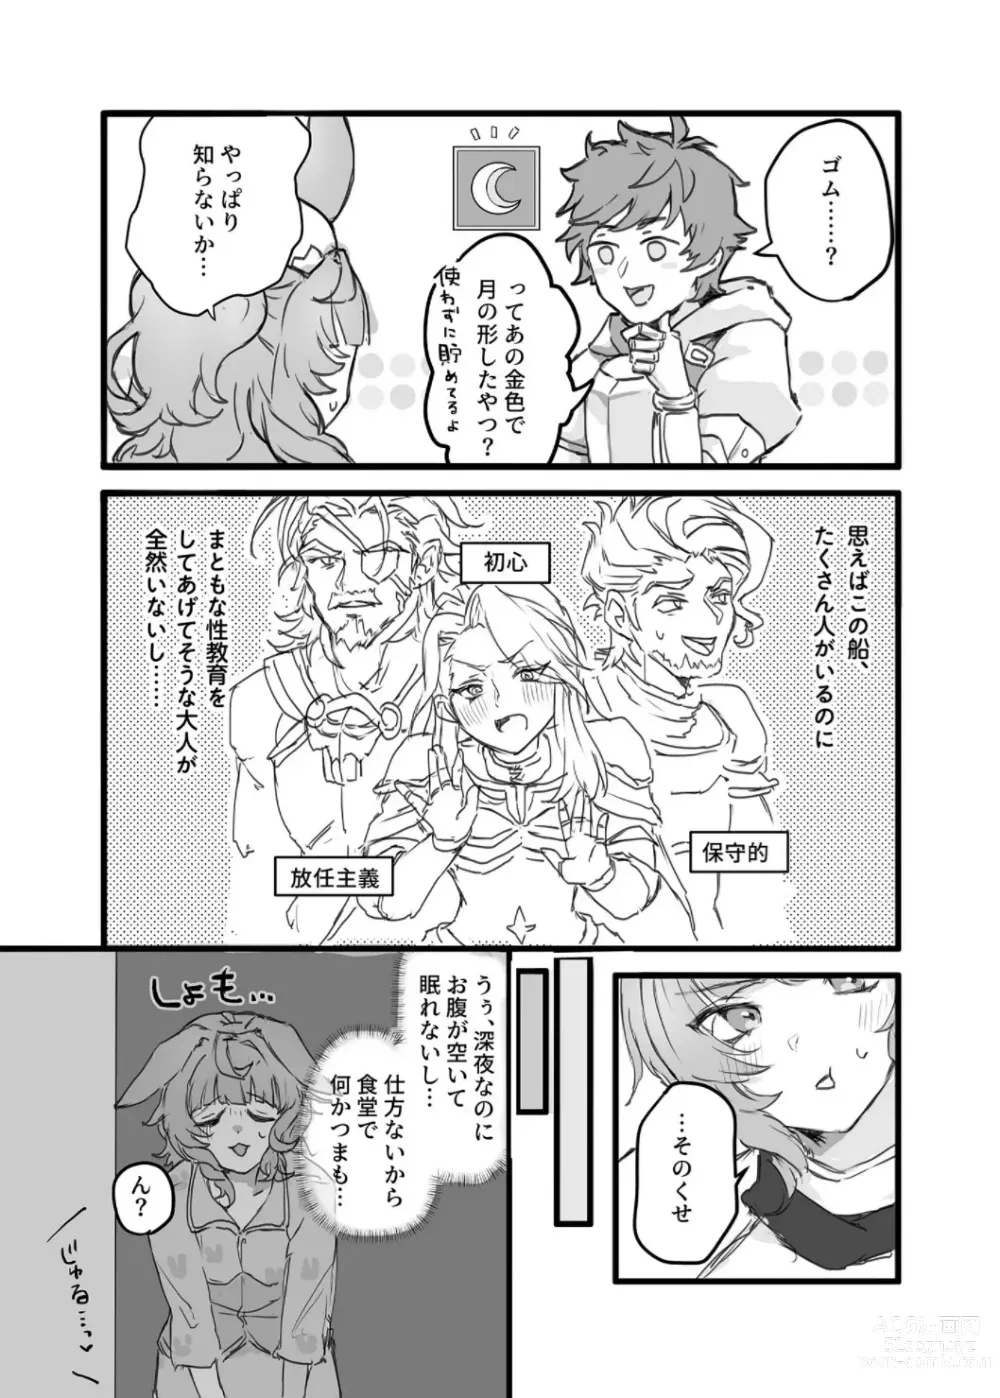 Page 3 of doujinshi Kore, Nani ka Shitteru?